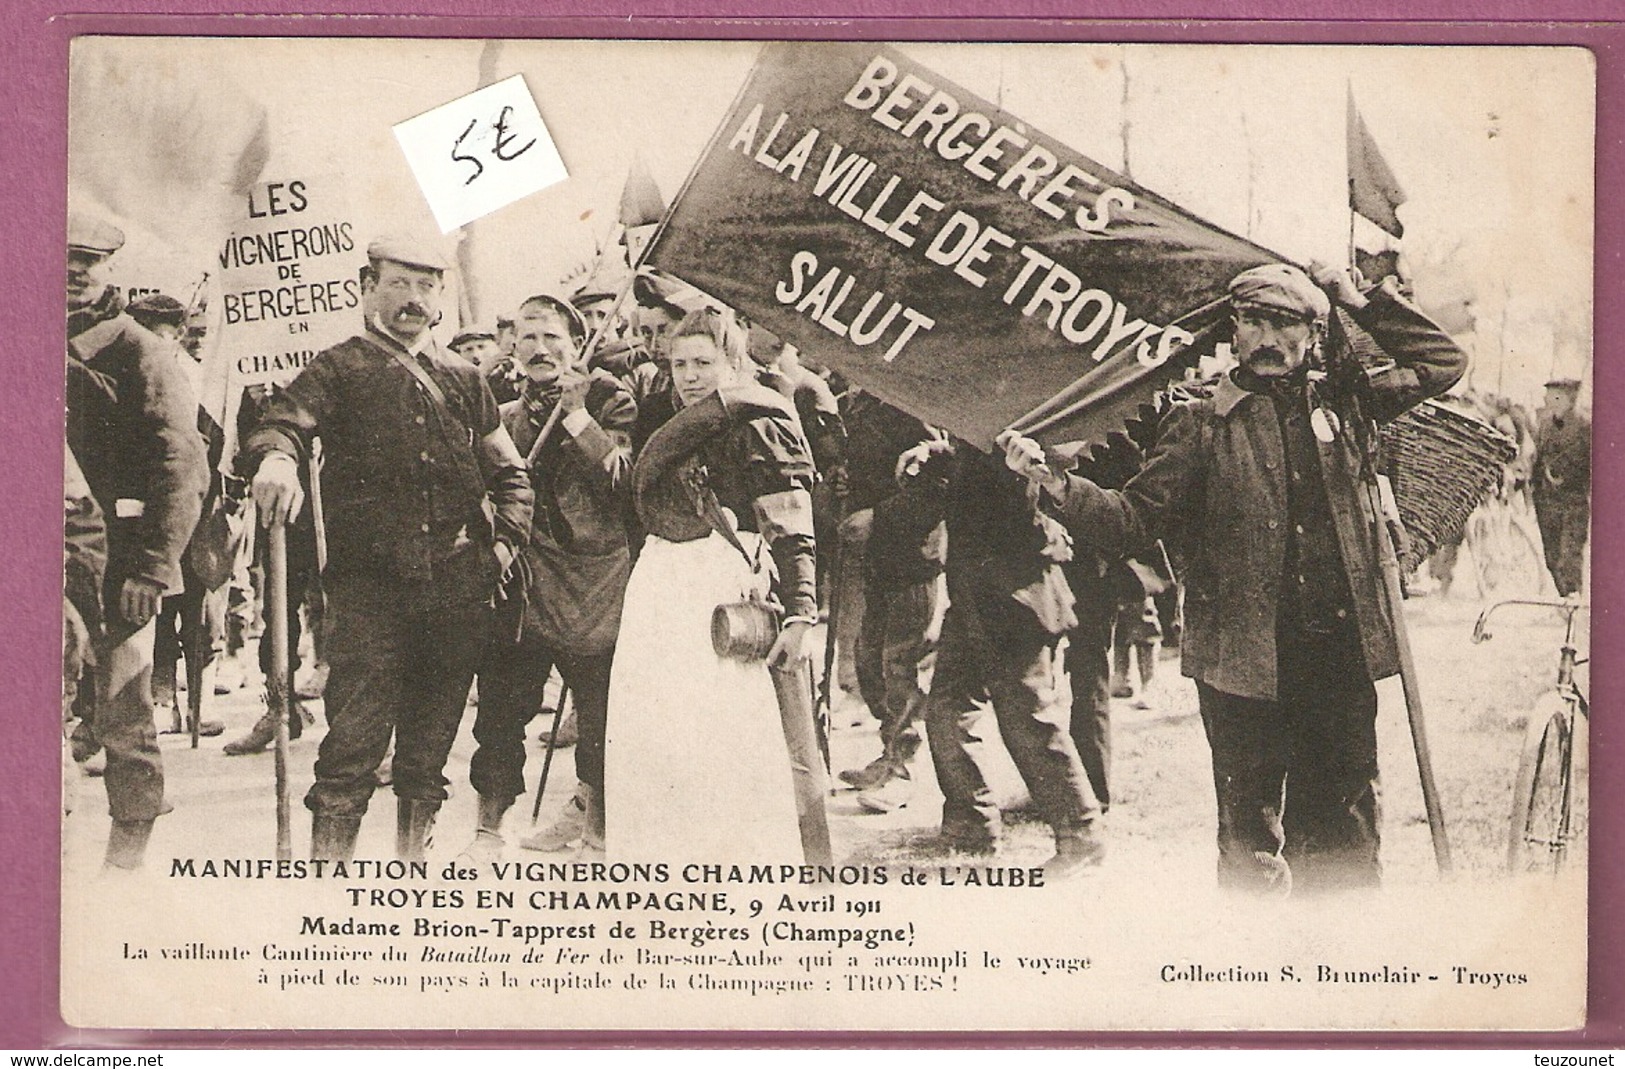 Cpa Manifestation Des Vignerons Champenois De L'Aube Troyes 9 Avril 1911 Mme Brion Tapprest Coll Brunclair - Troyes